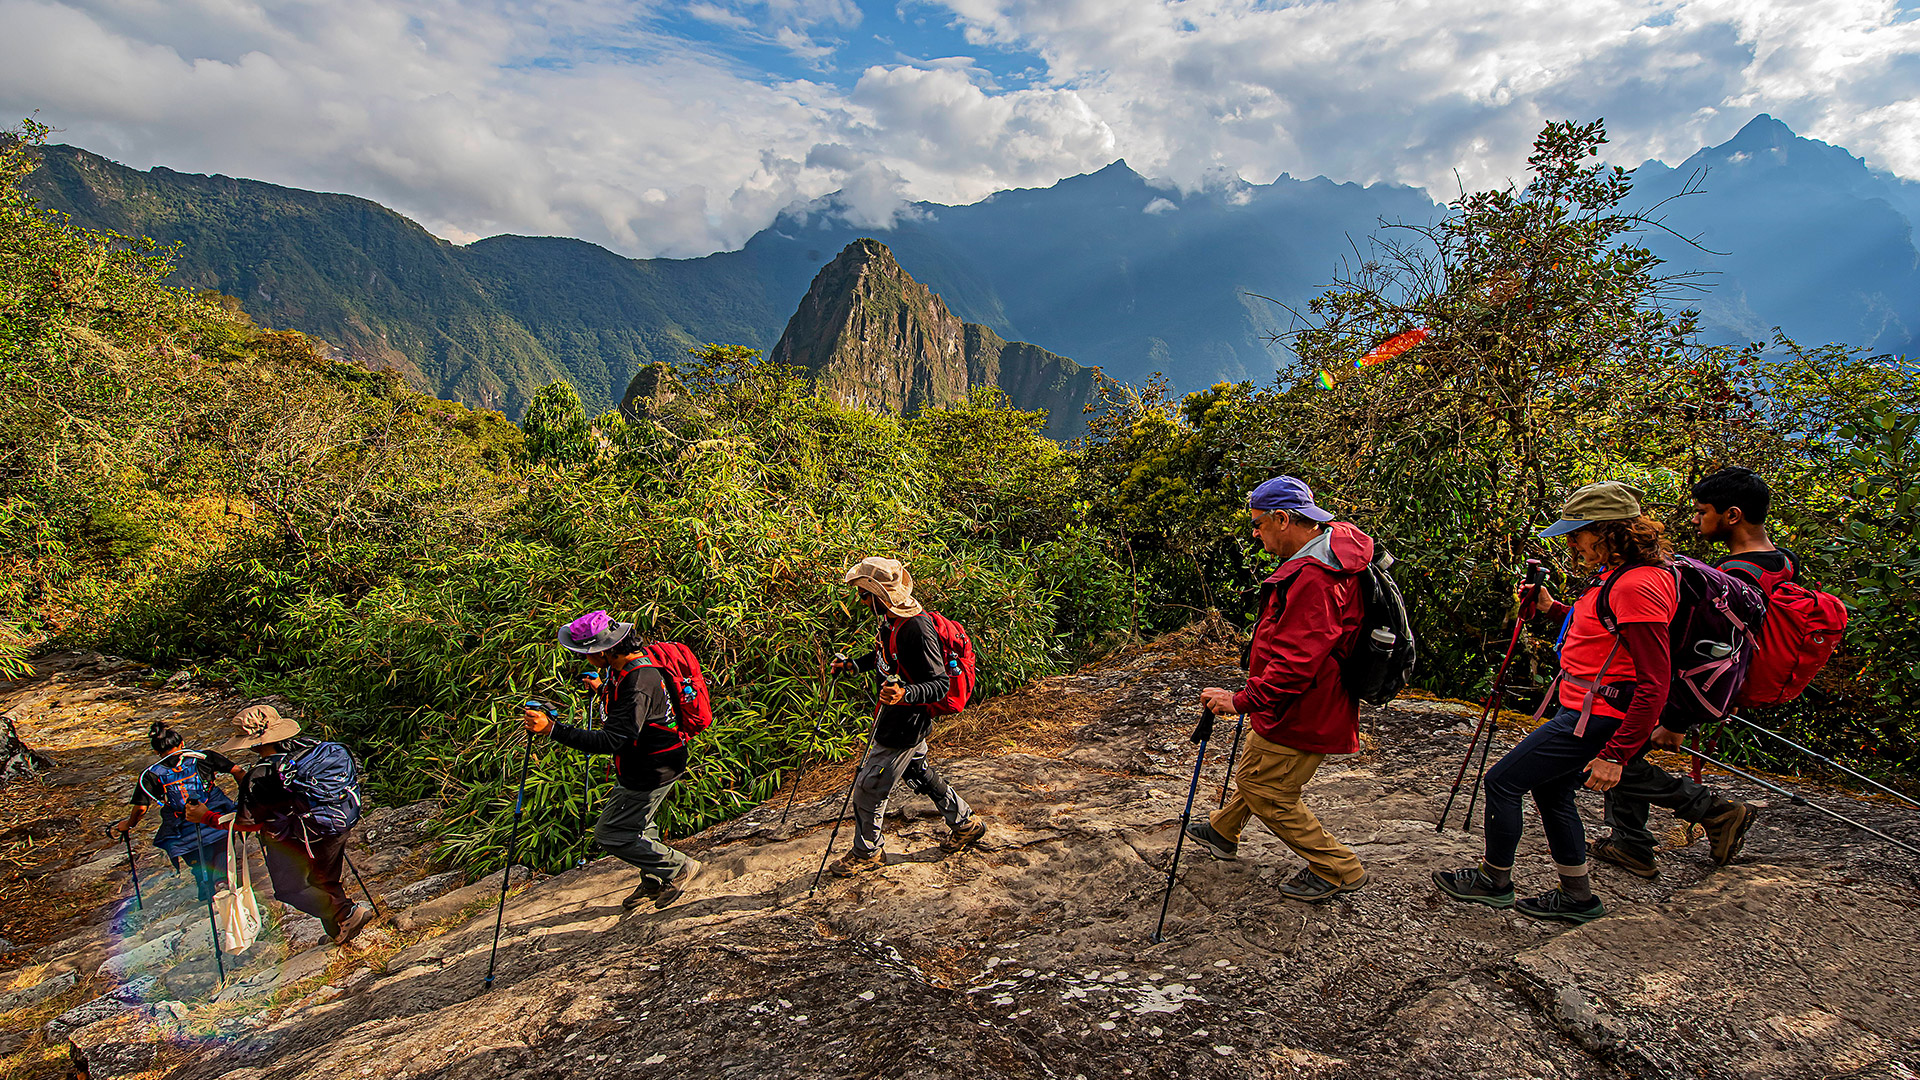 Visiting Machu Picchu after the short Inca trail